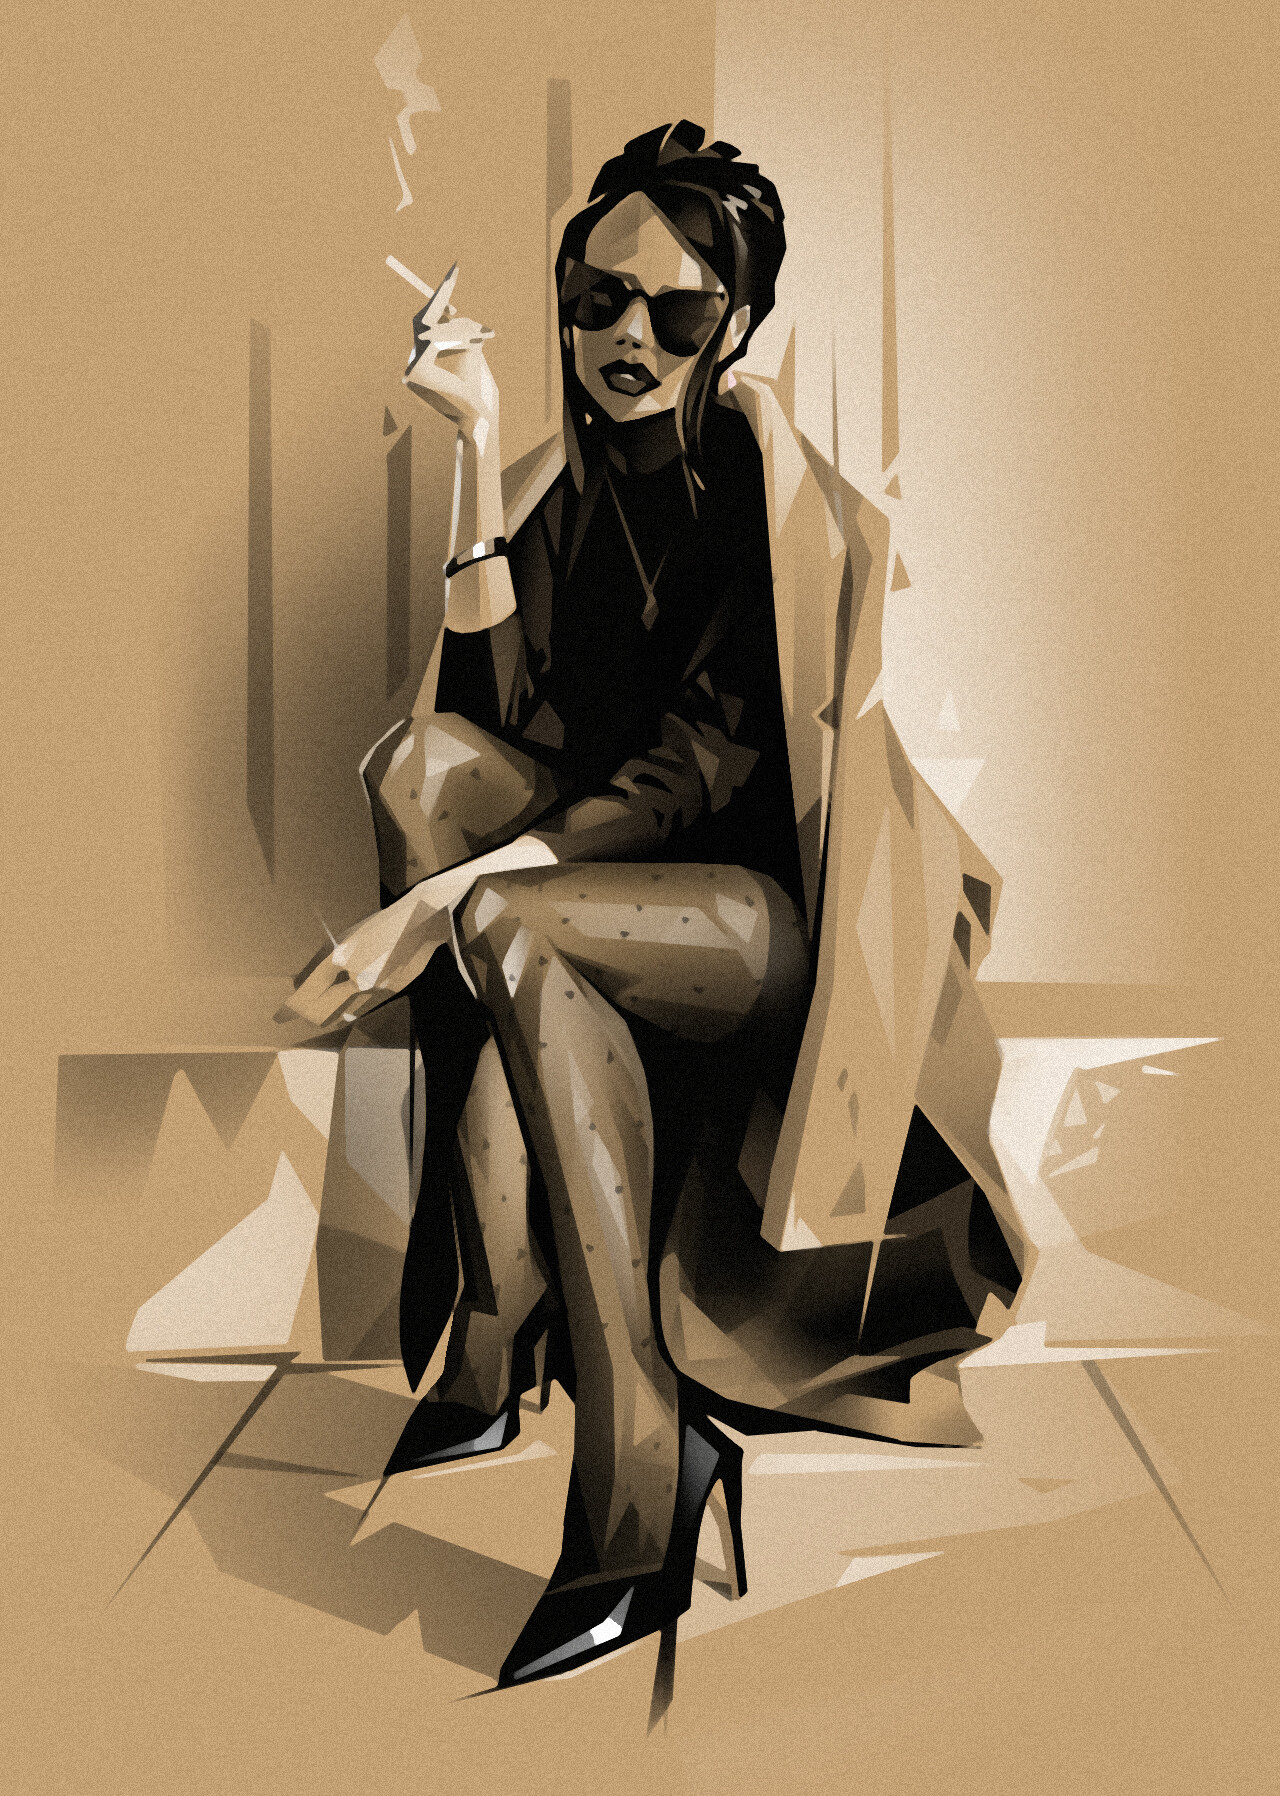 Azamat Khairov Artwork Portrait Display Digital Art Brown Coat Sitting Looking At Viewer Women Cigar 1280x1796